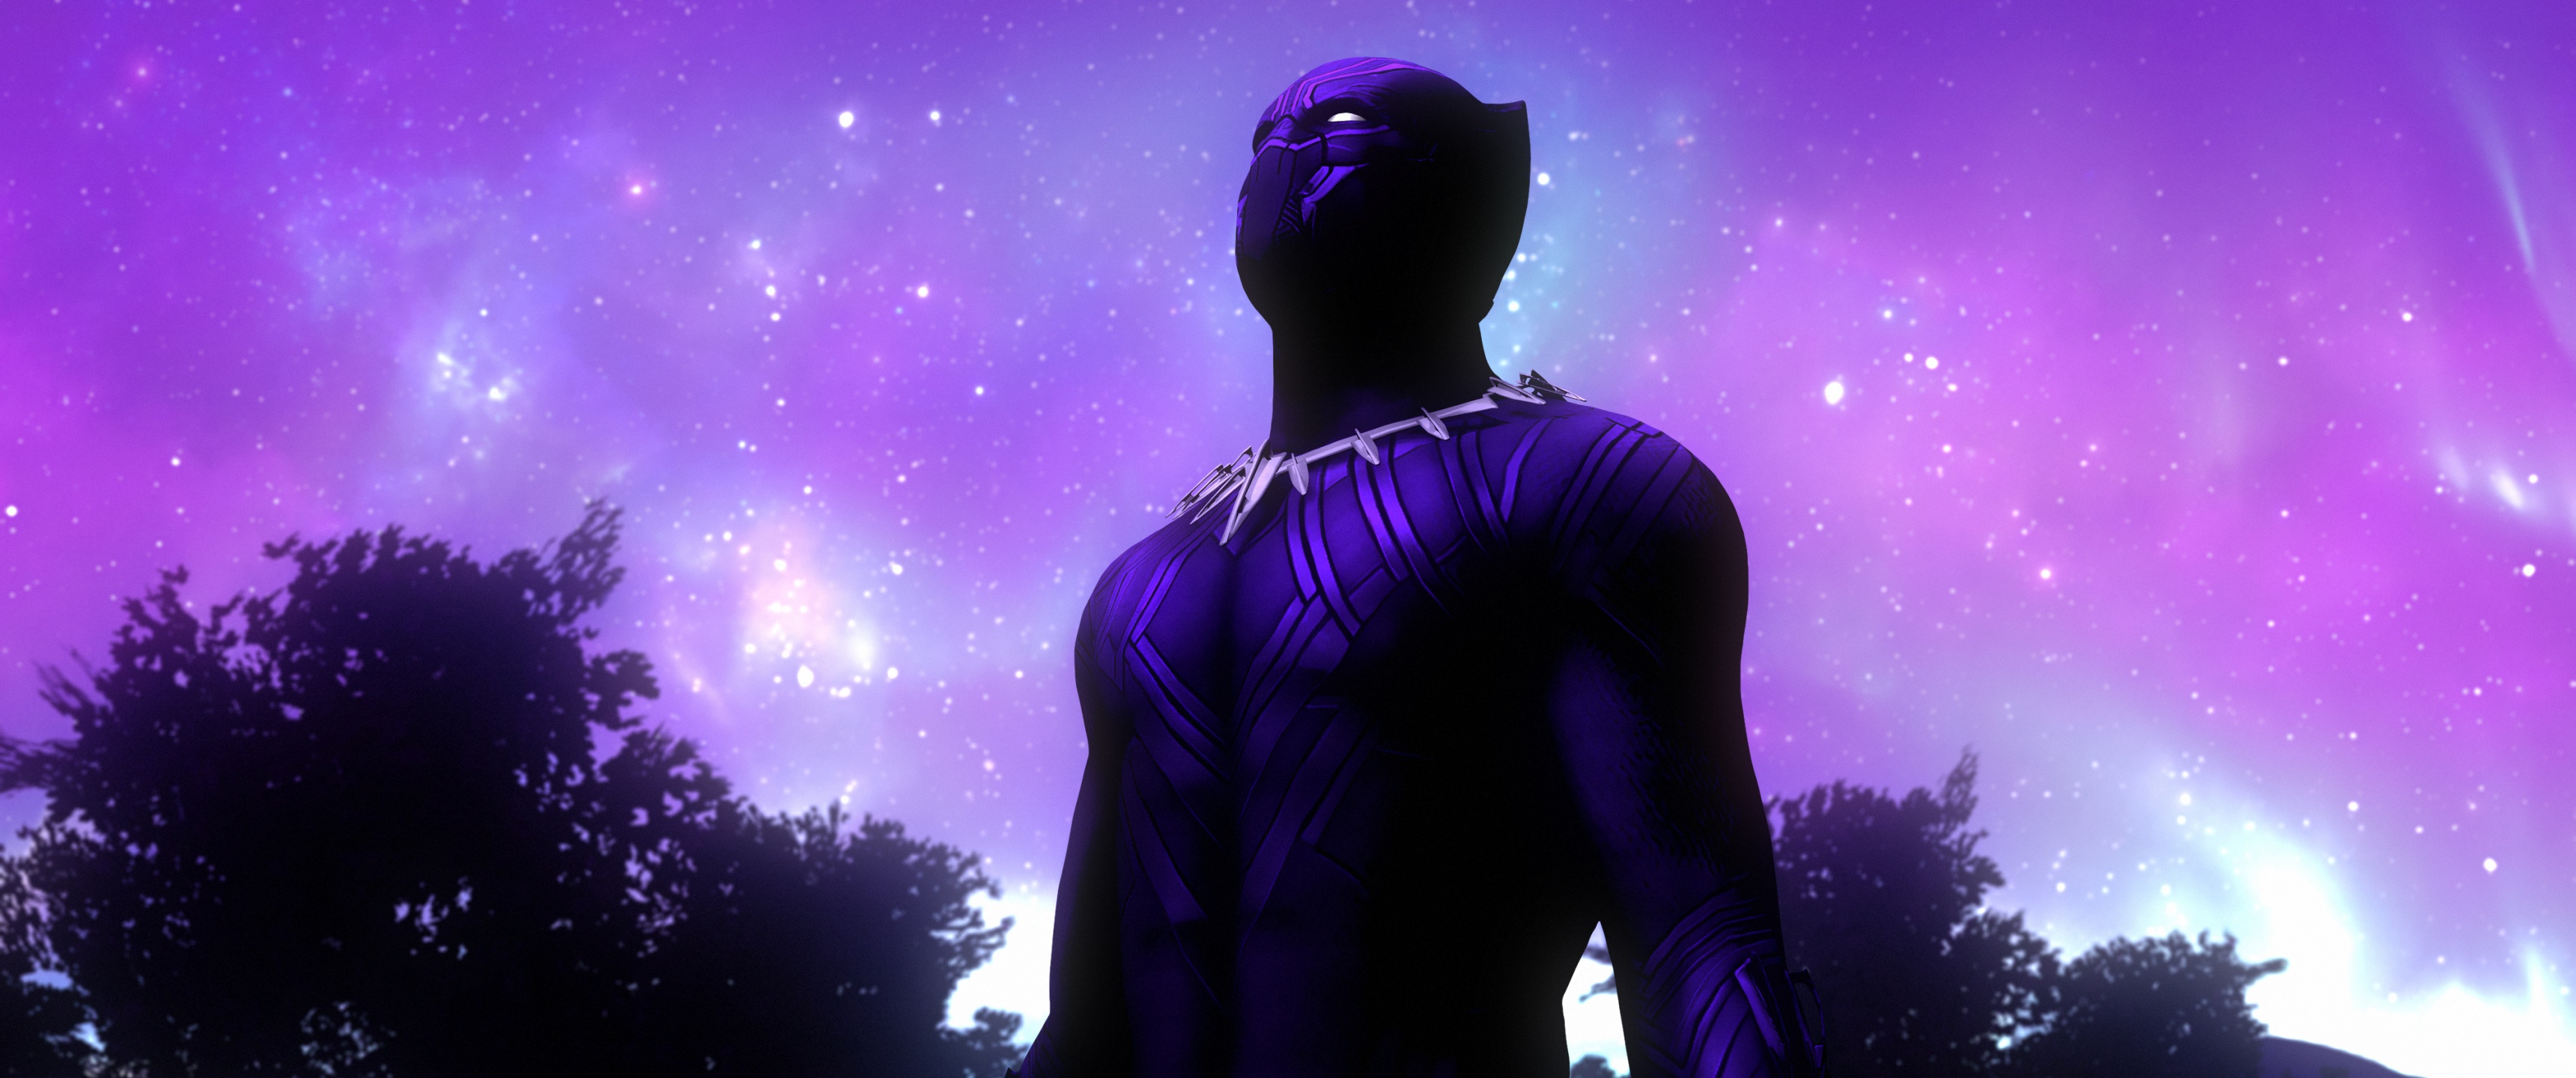 Black Panther Wallpaper 4K, Marvel Comics, Purple sky, Outer space, Stars, Fantasy